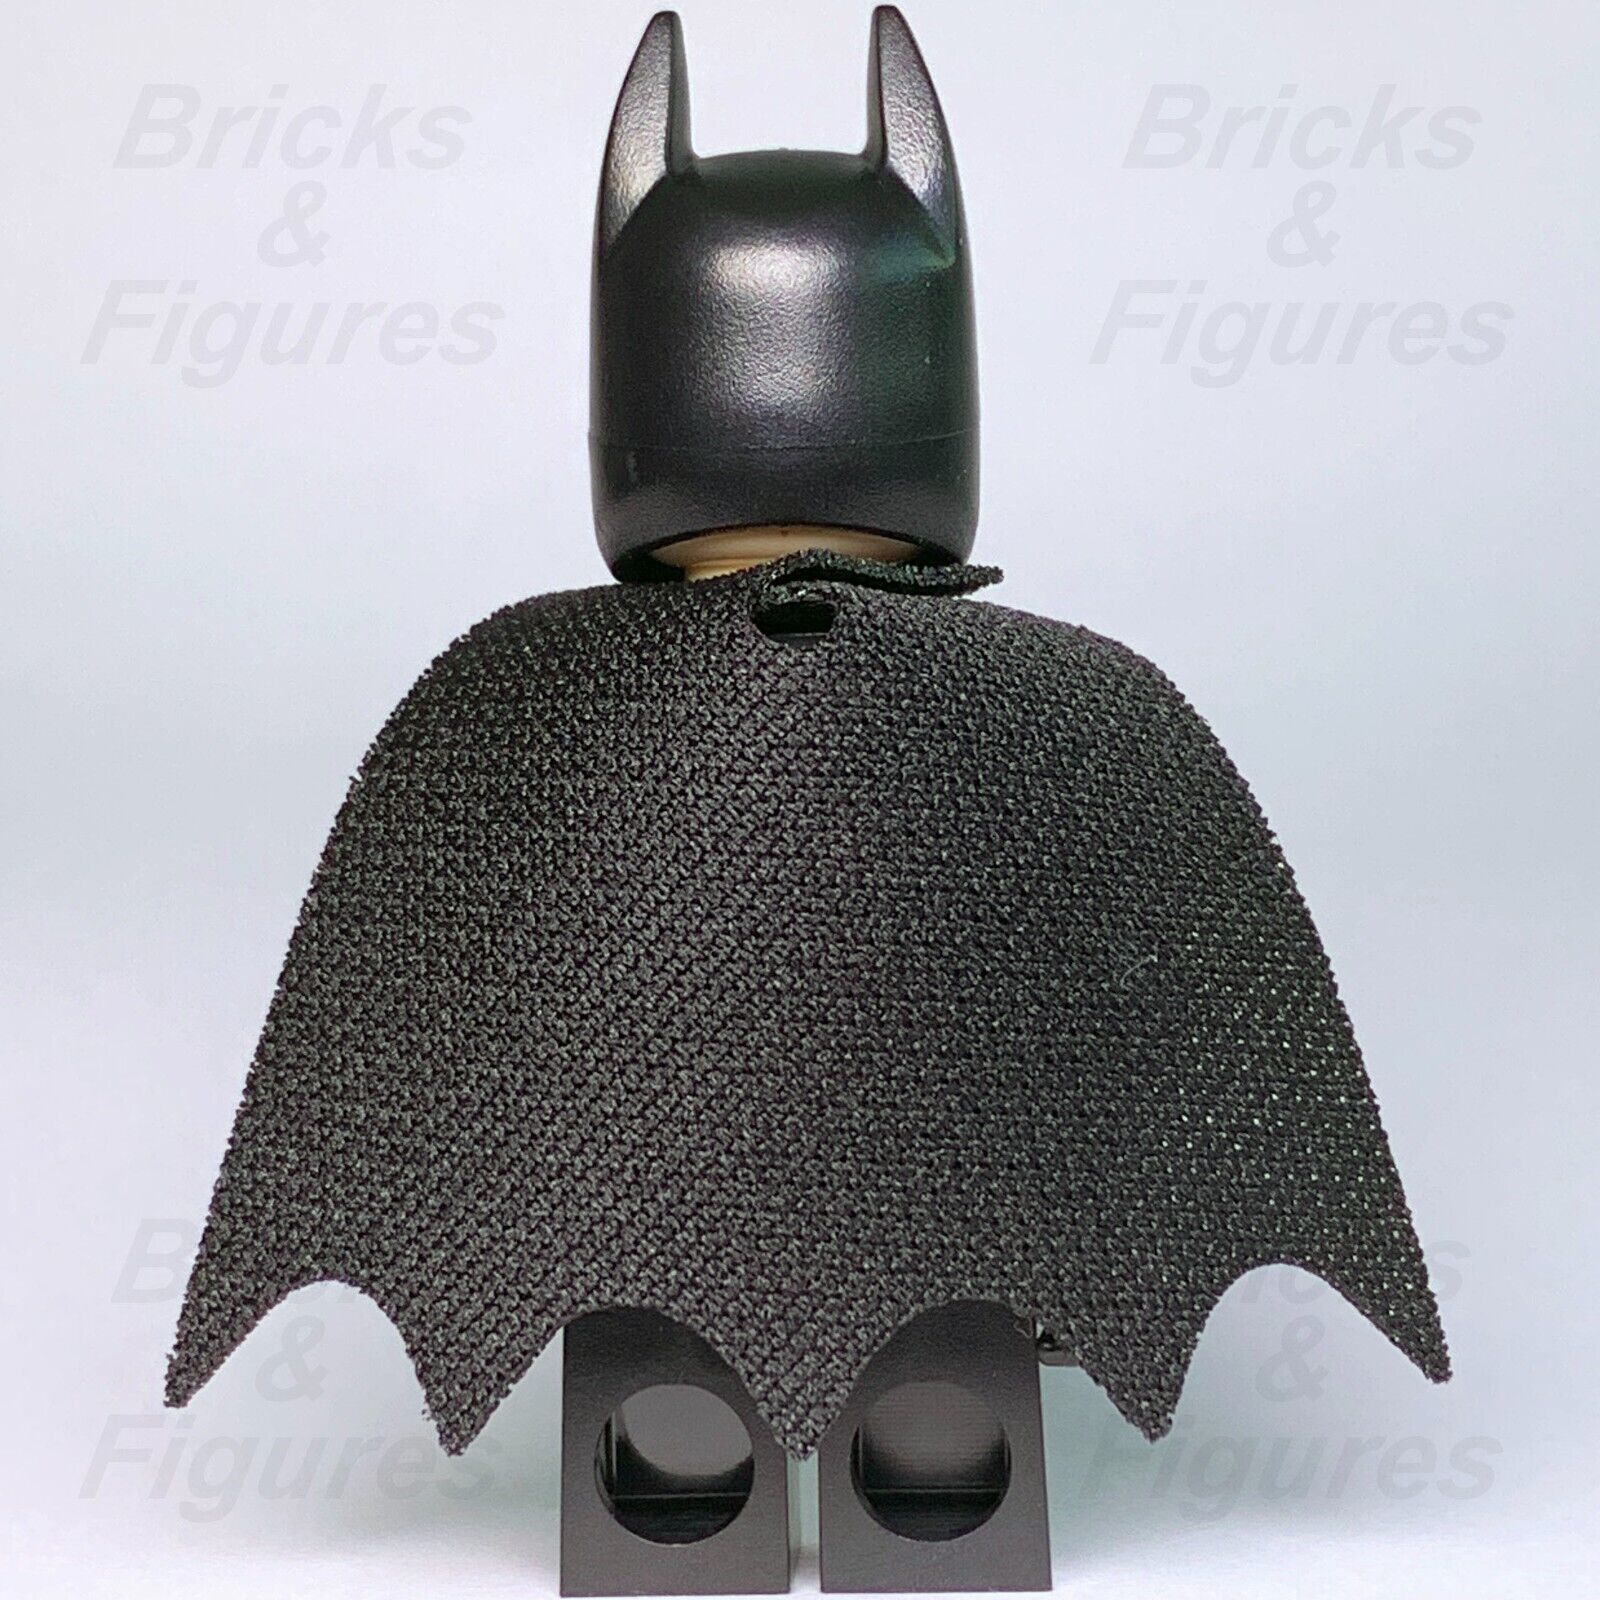 LEGO Super Heroes Batman Minifigure DC The Batman Movie 70915 70917 sh415